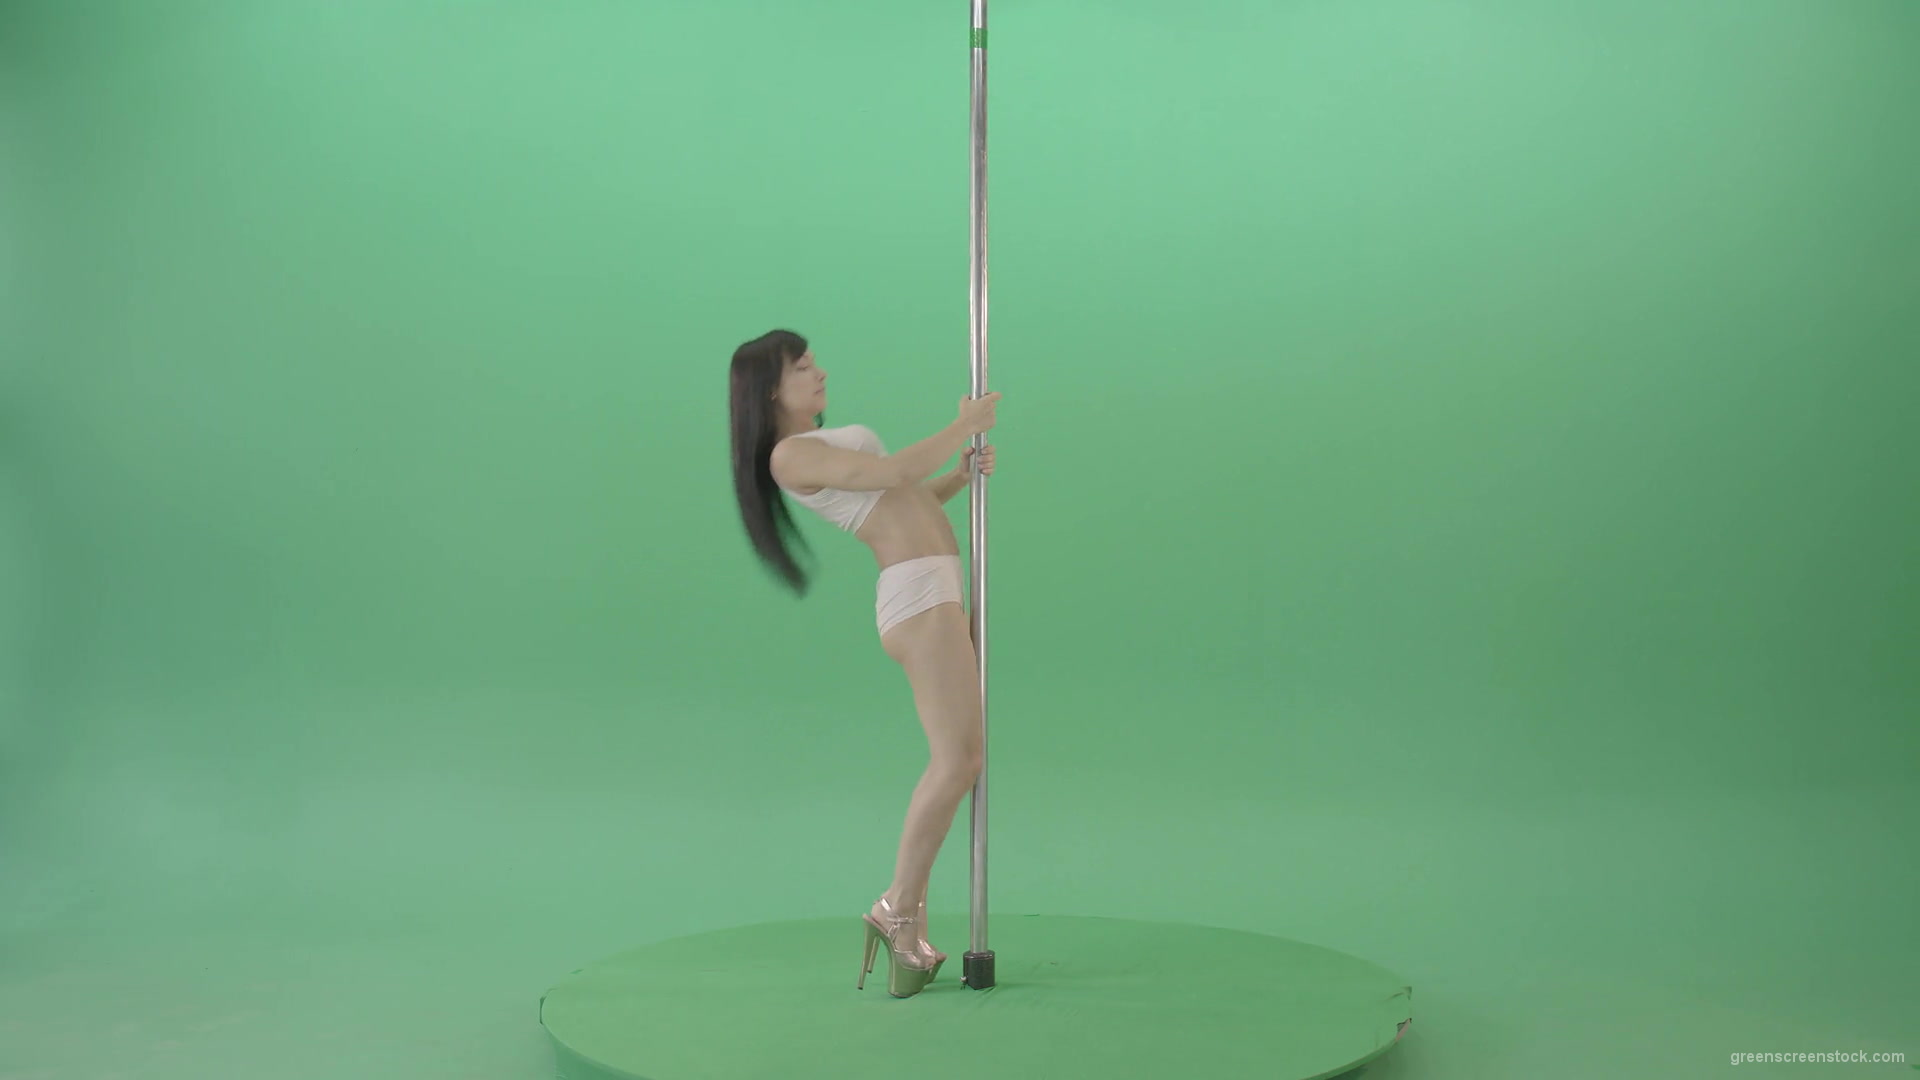 Pole-Dancing-Girl-waving-with-body-on-green-screen-4K-Video-Footage-1920_006 Green Screen Stock